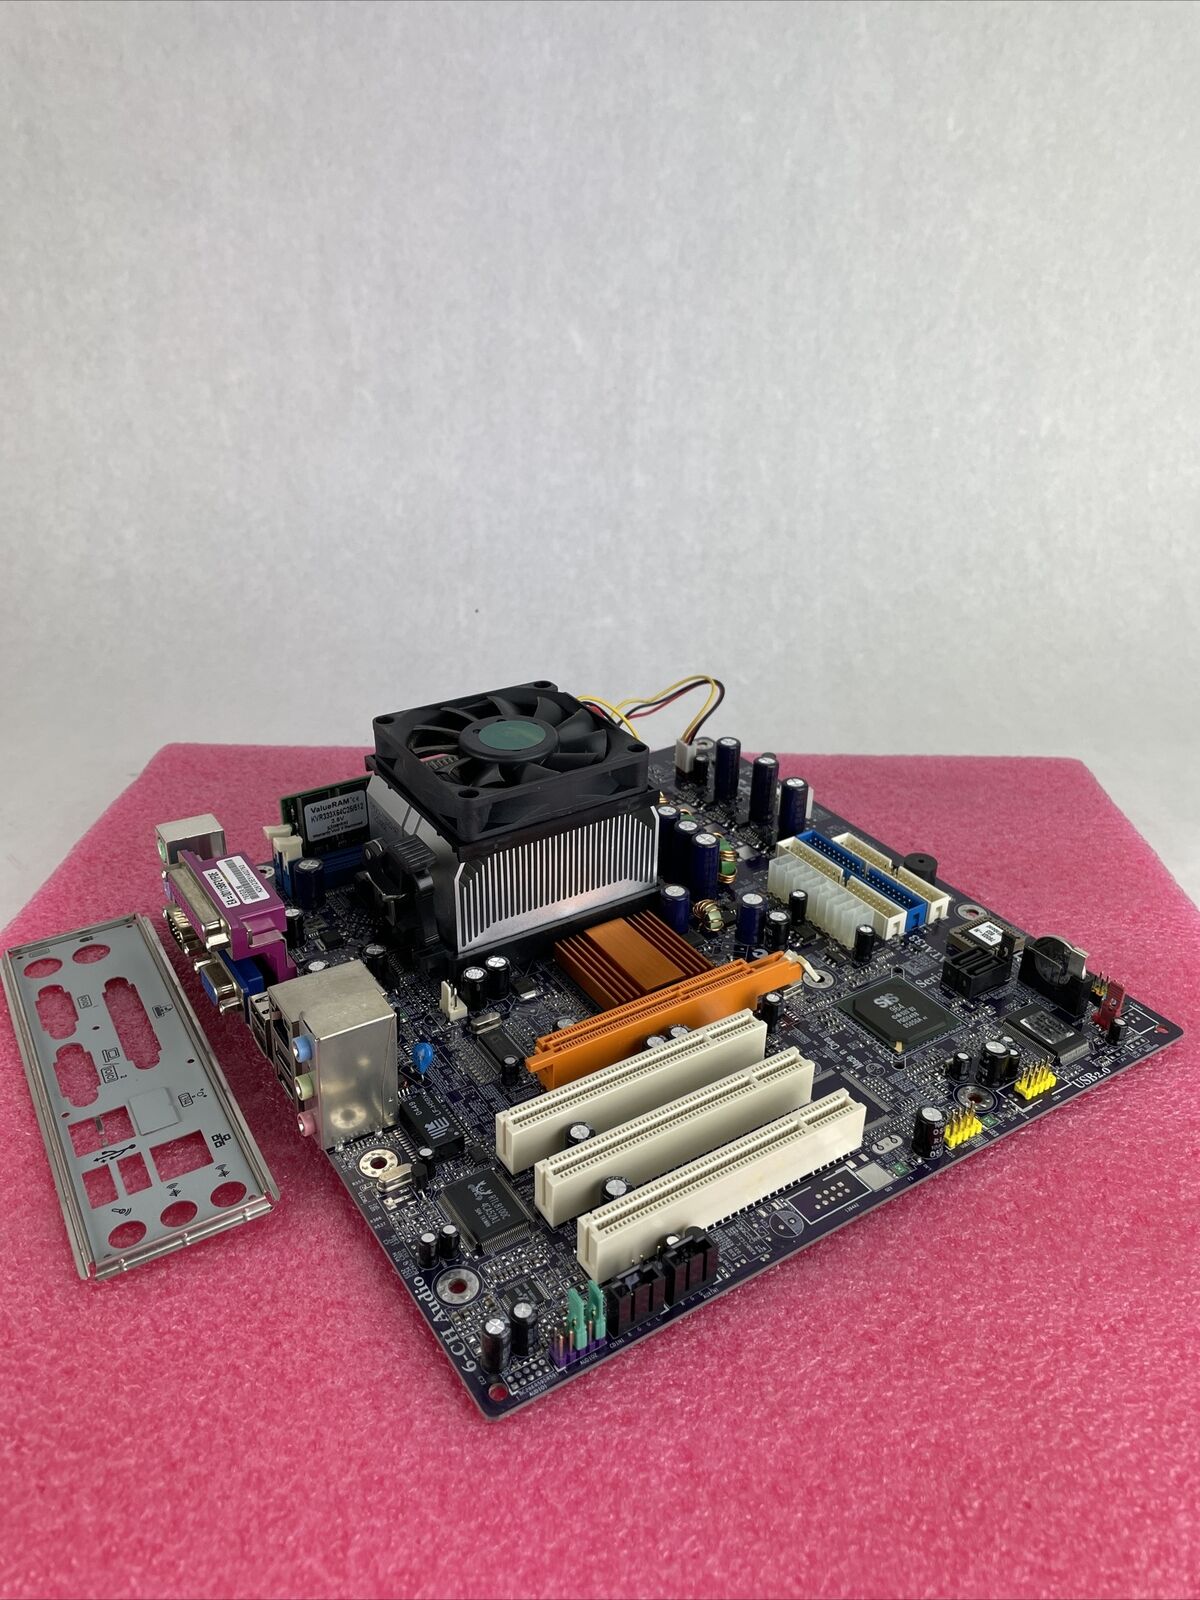 ECS 760GX-M Motherboard AMD Sempron 2600+ 1.6GHz 512MB RAM w/Shield